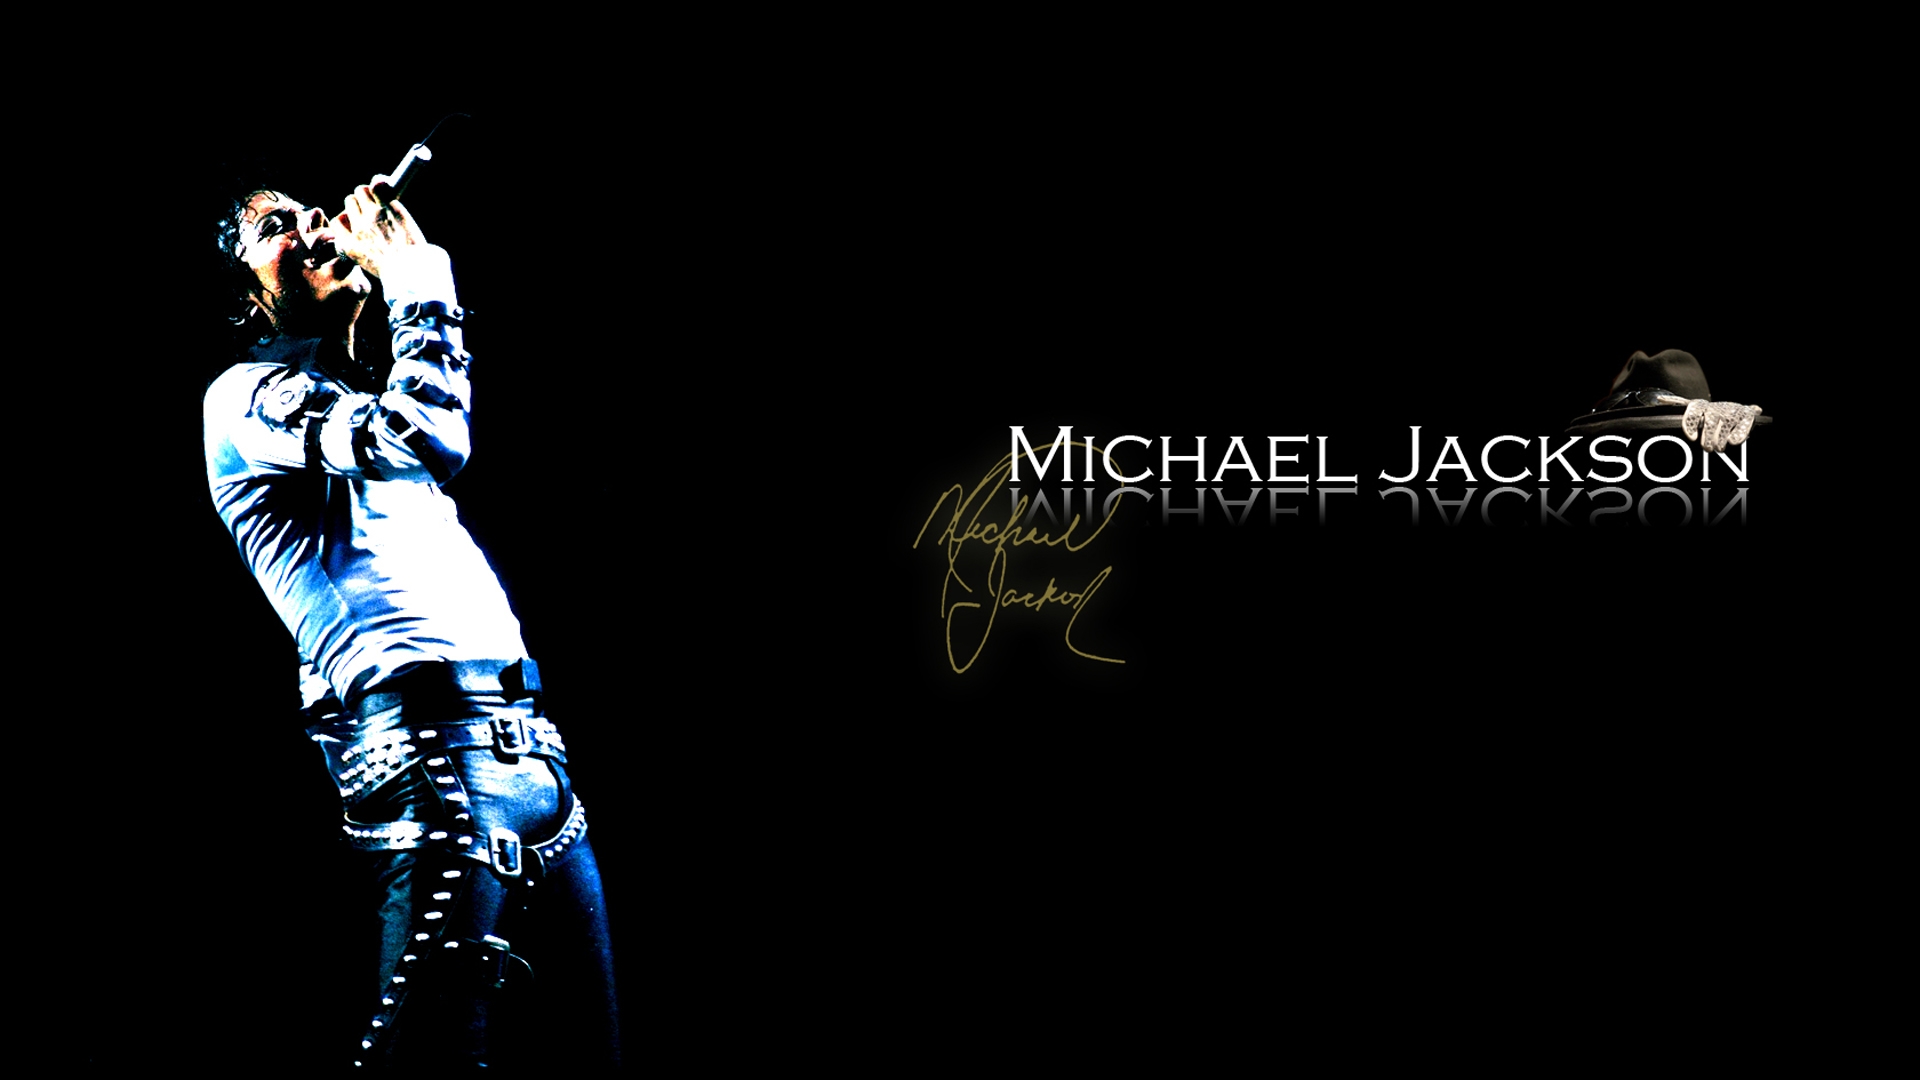 Michael Jackson The Legend   Wallpapers